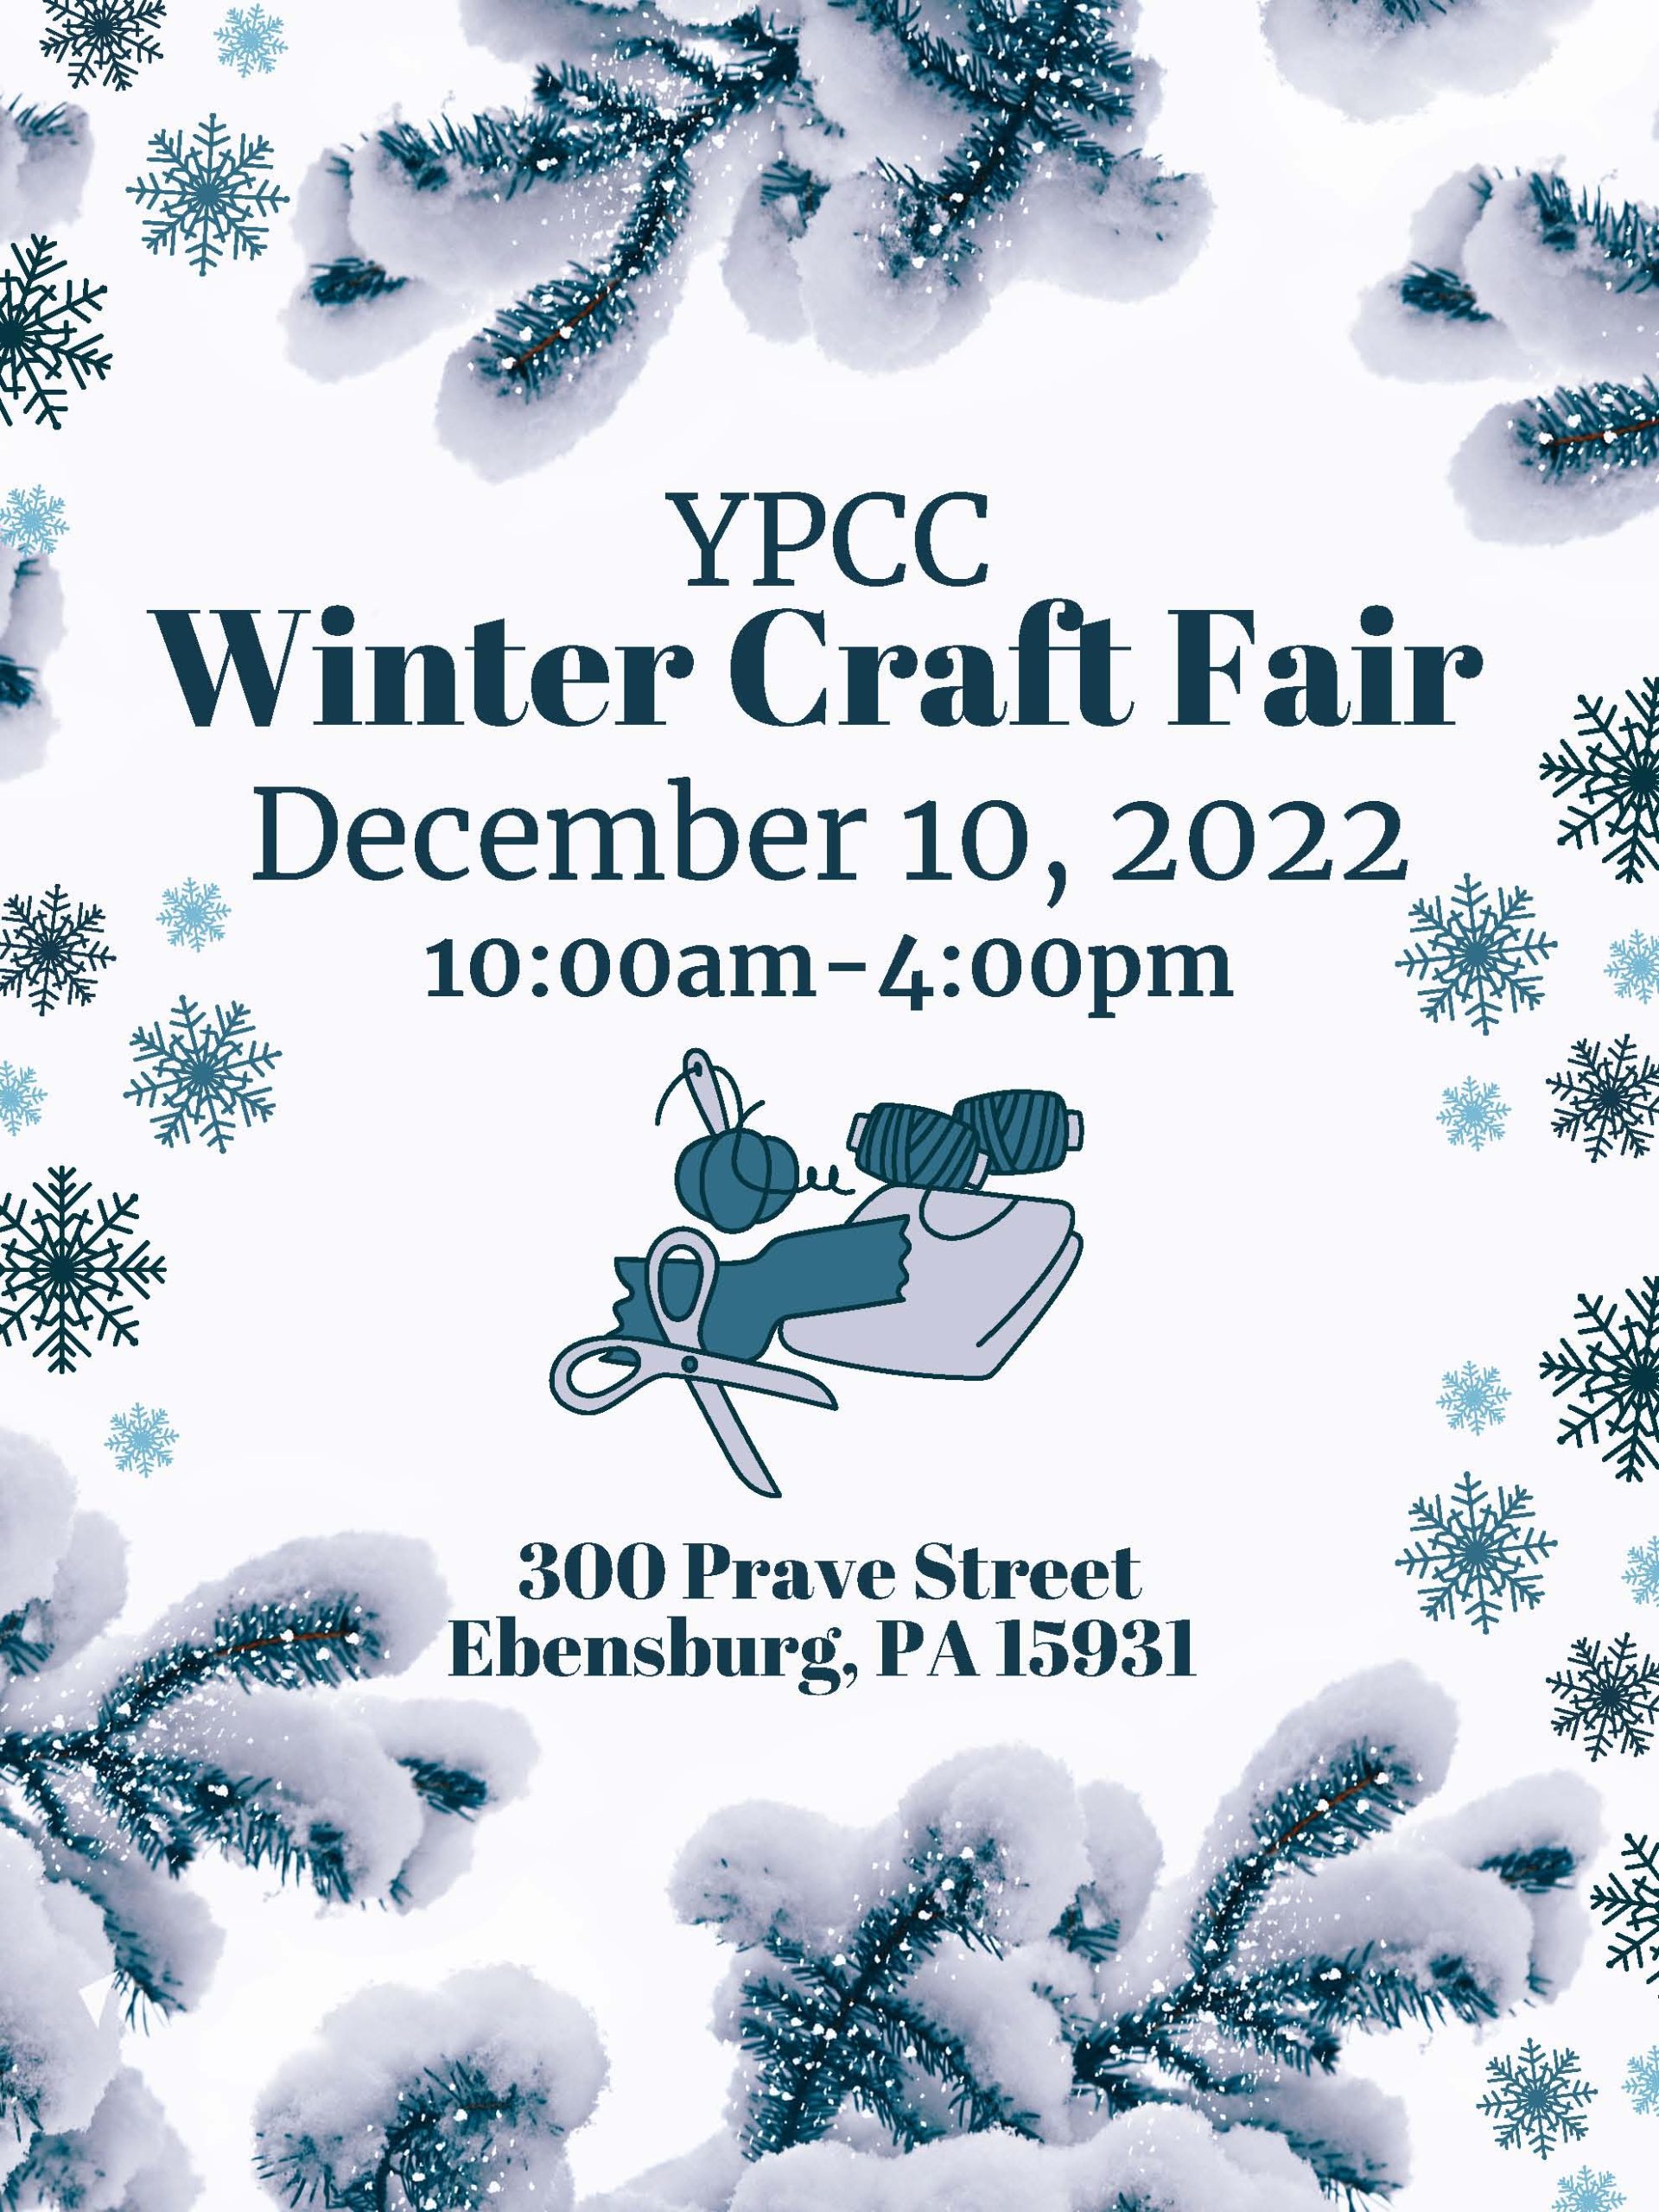 Winter Craft Fair at YPCC Ebensburg Borough